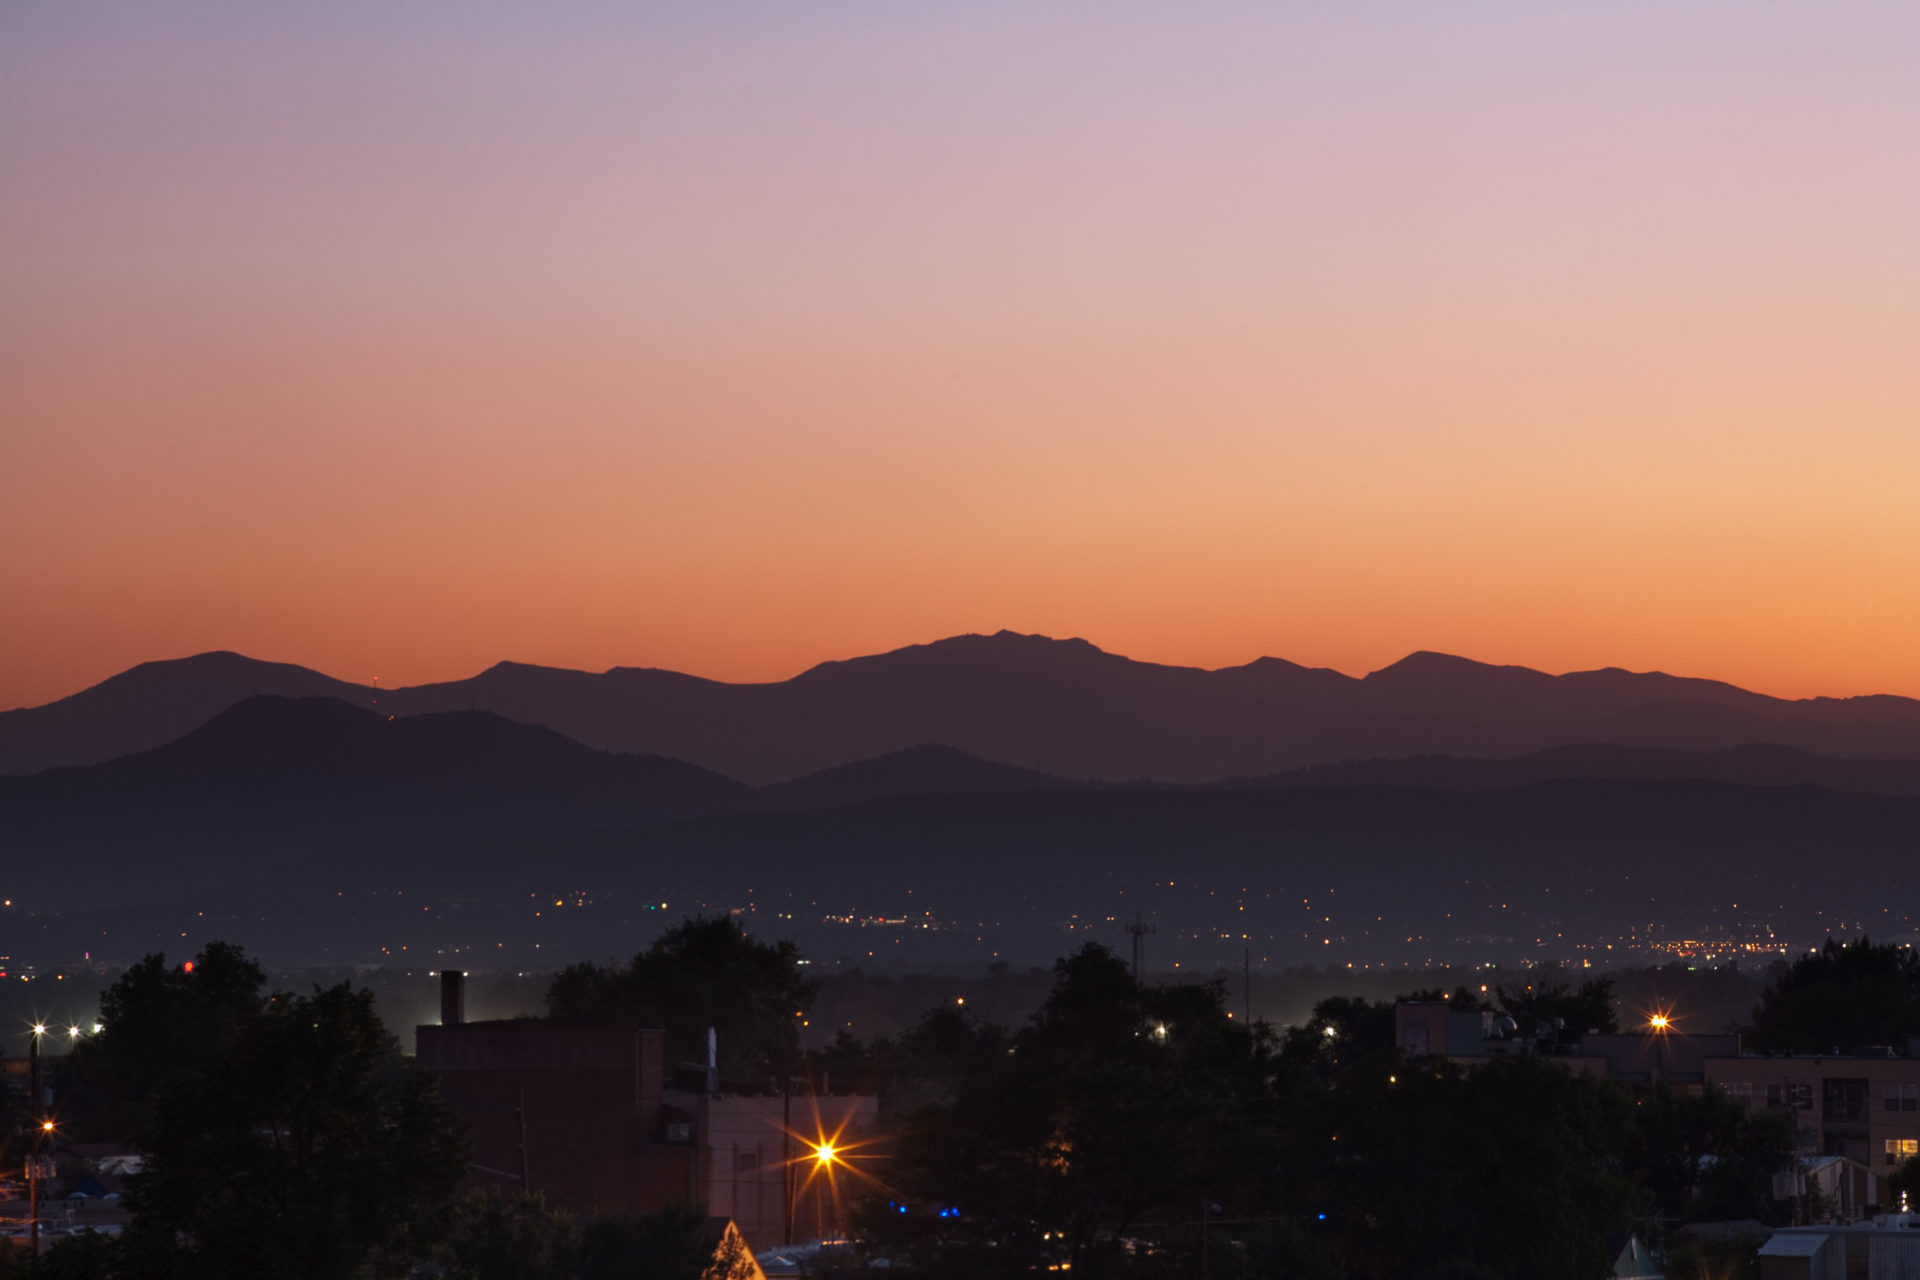 Mount Evans sunset - August 9, 2011